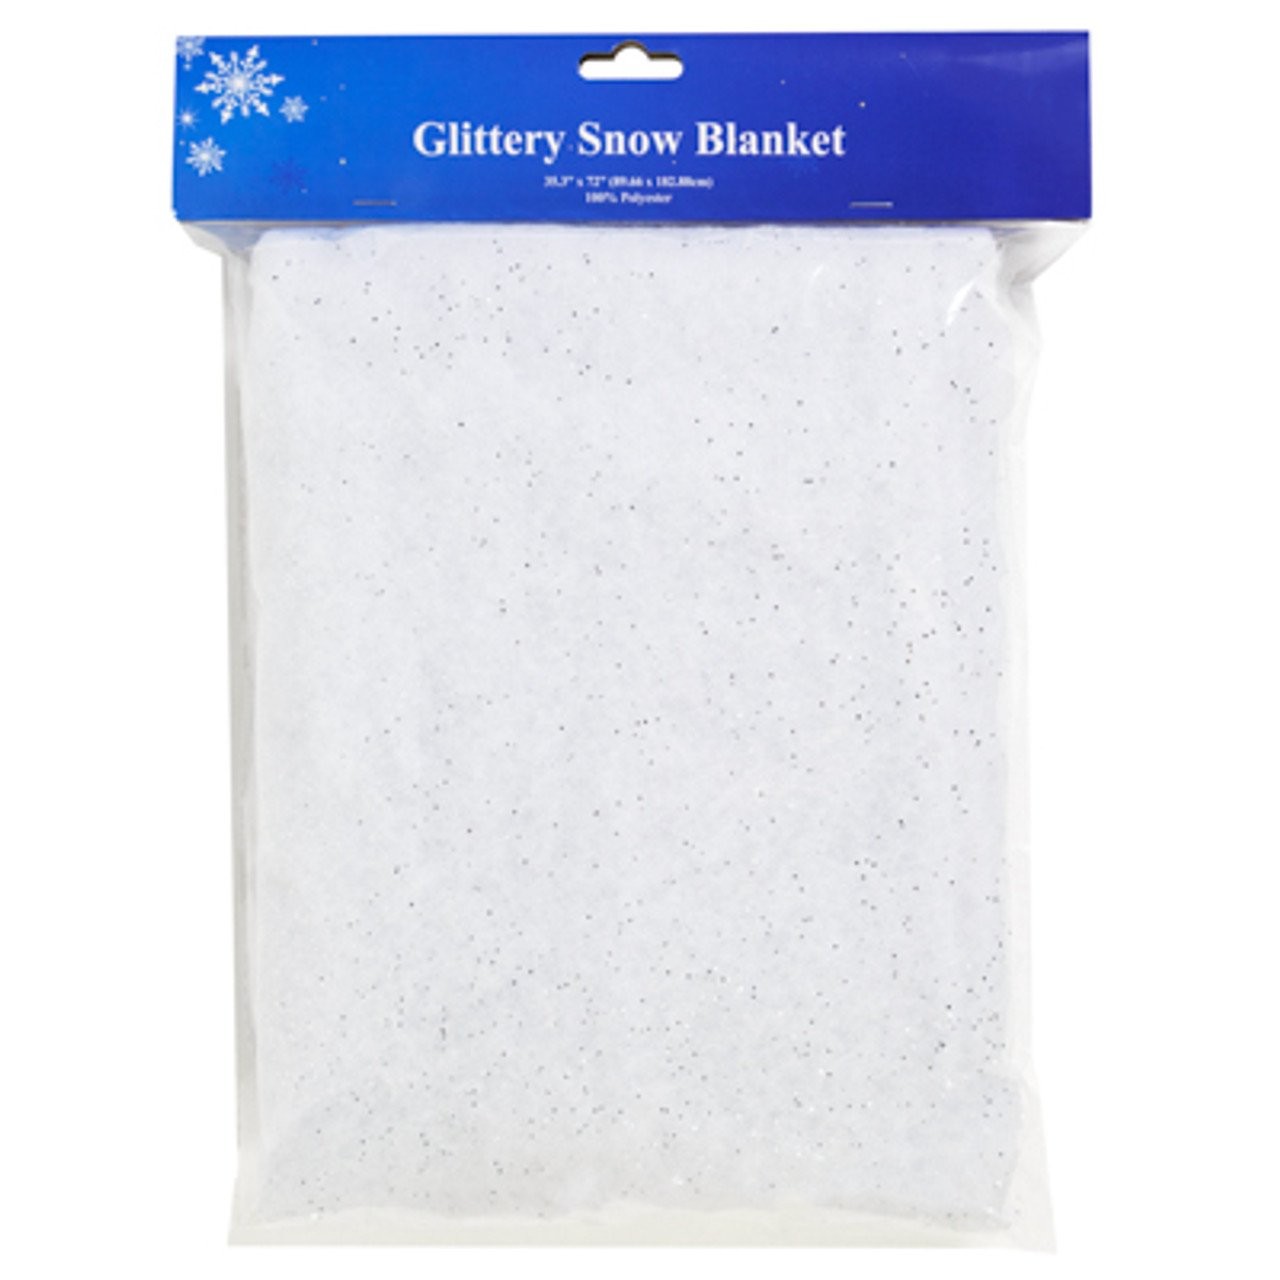 REGENT GLITTERY SNOW BLANKET 35x72